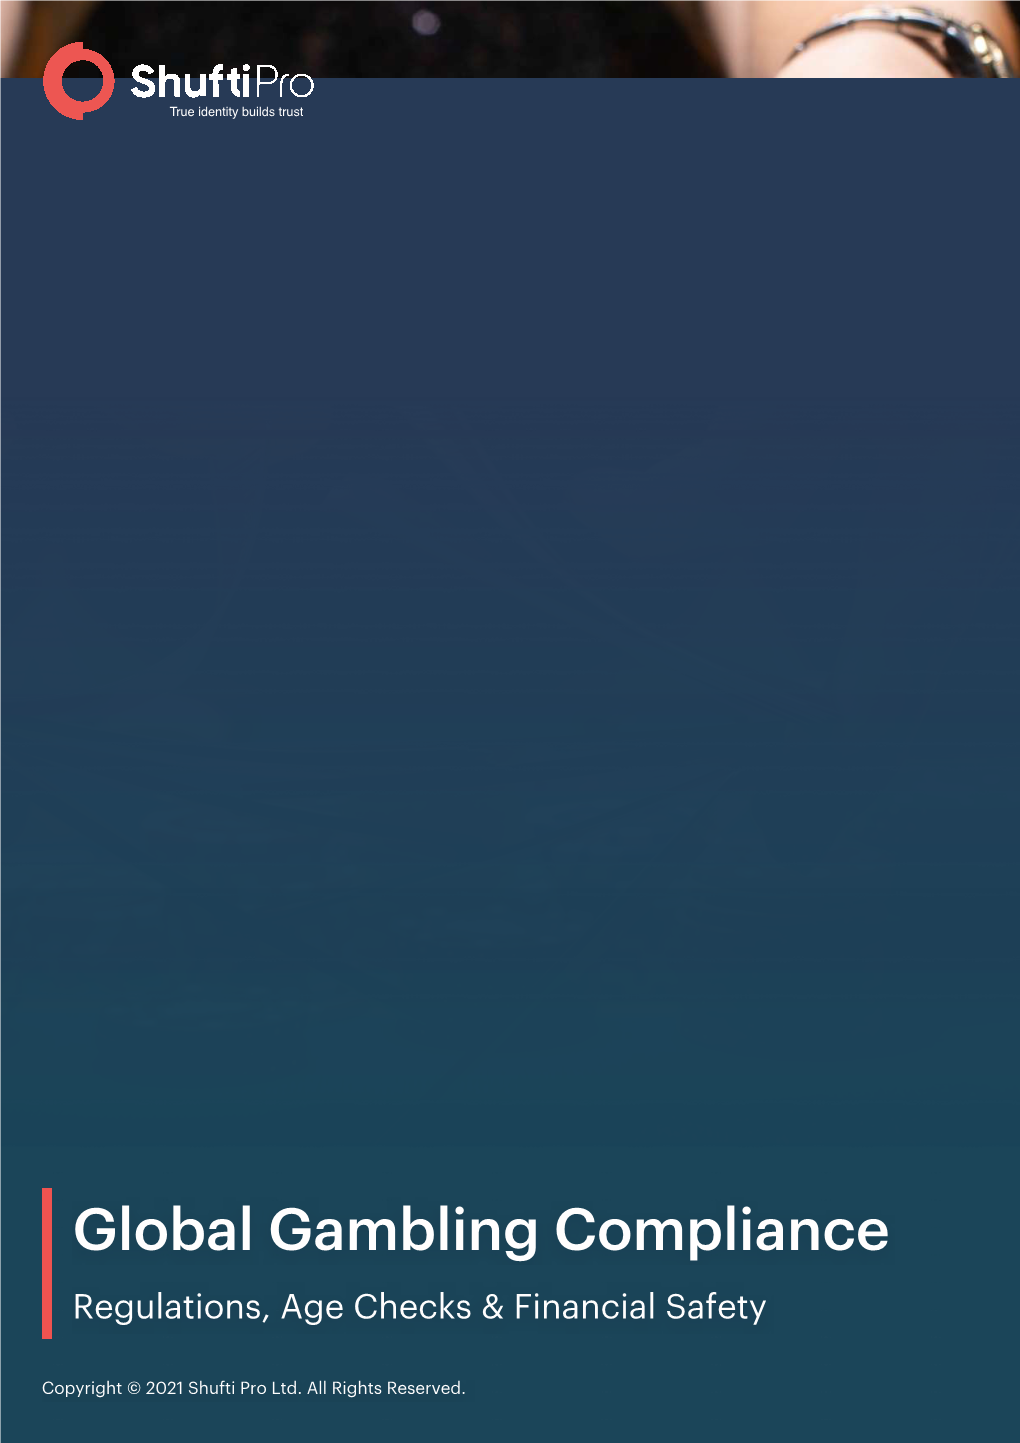 Global Gambling Compliance Global Gambling Compliance Regulations, Age Checks & Financial Safety Regulations, Age Checks & Financial Safety